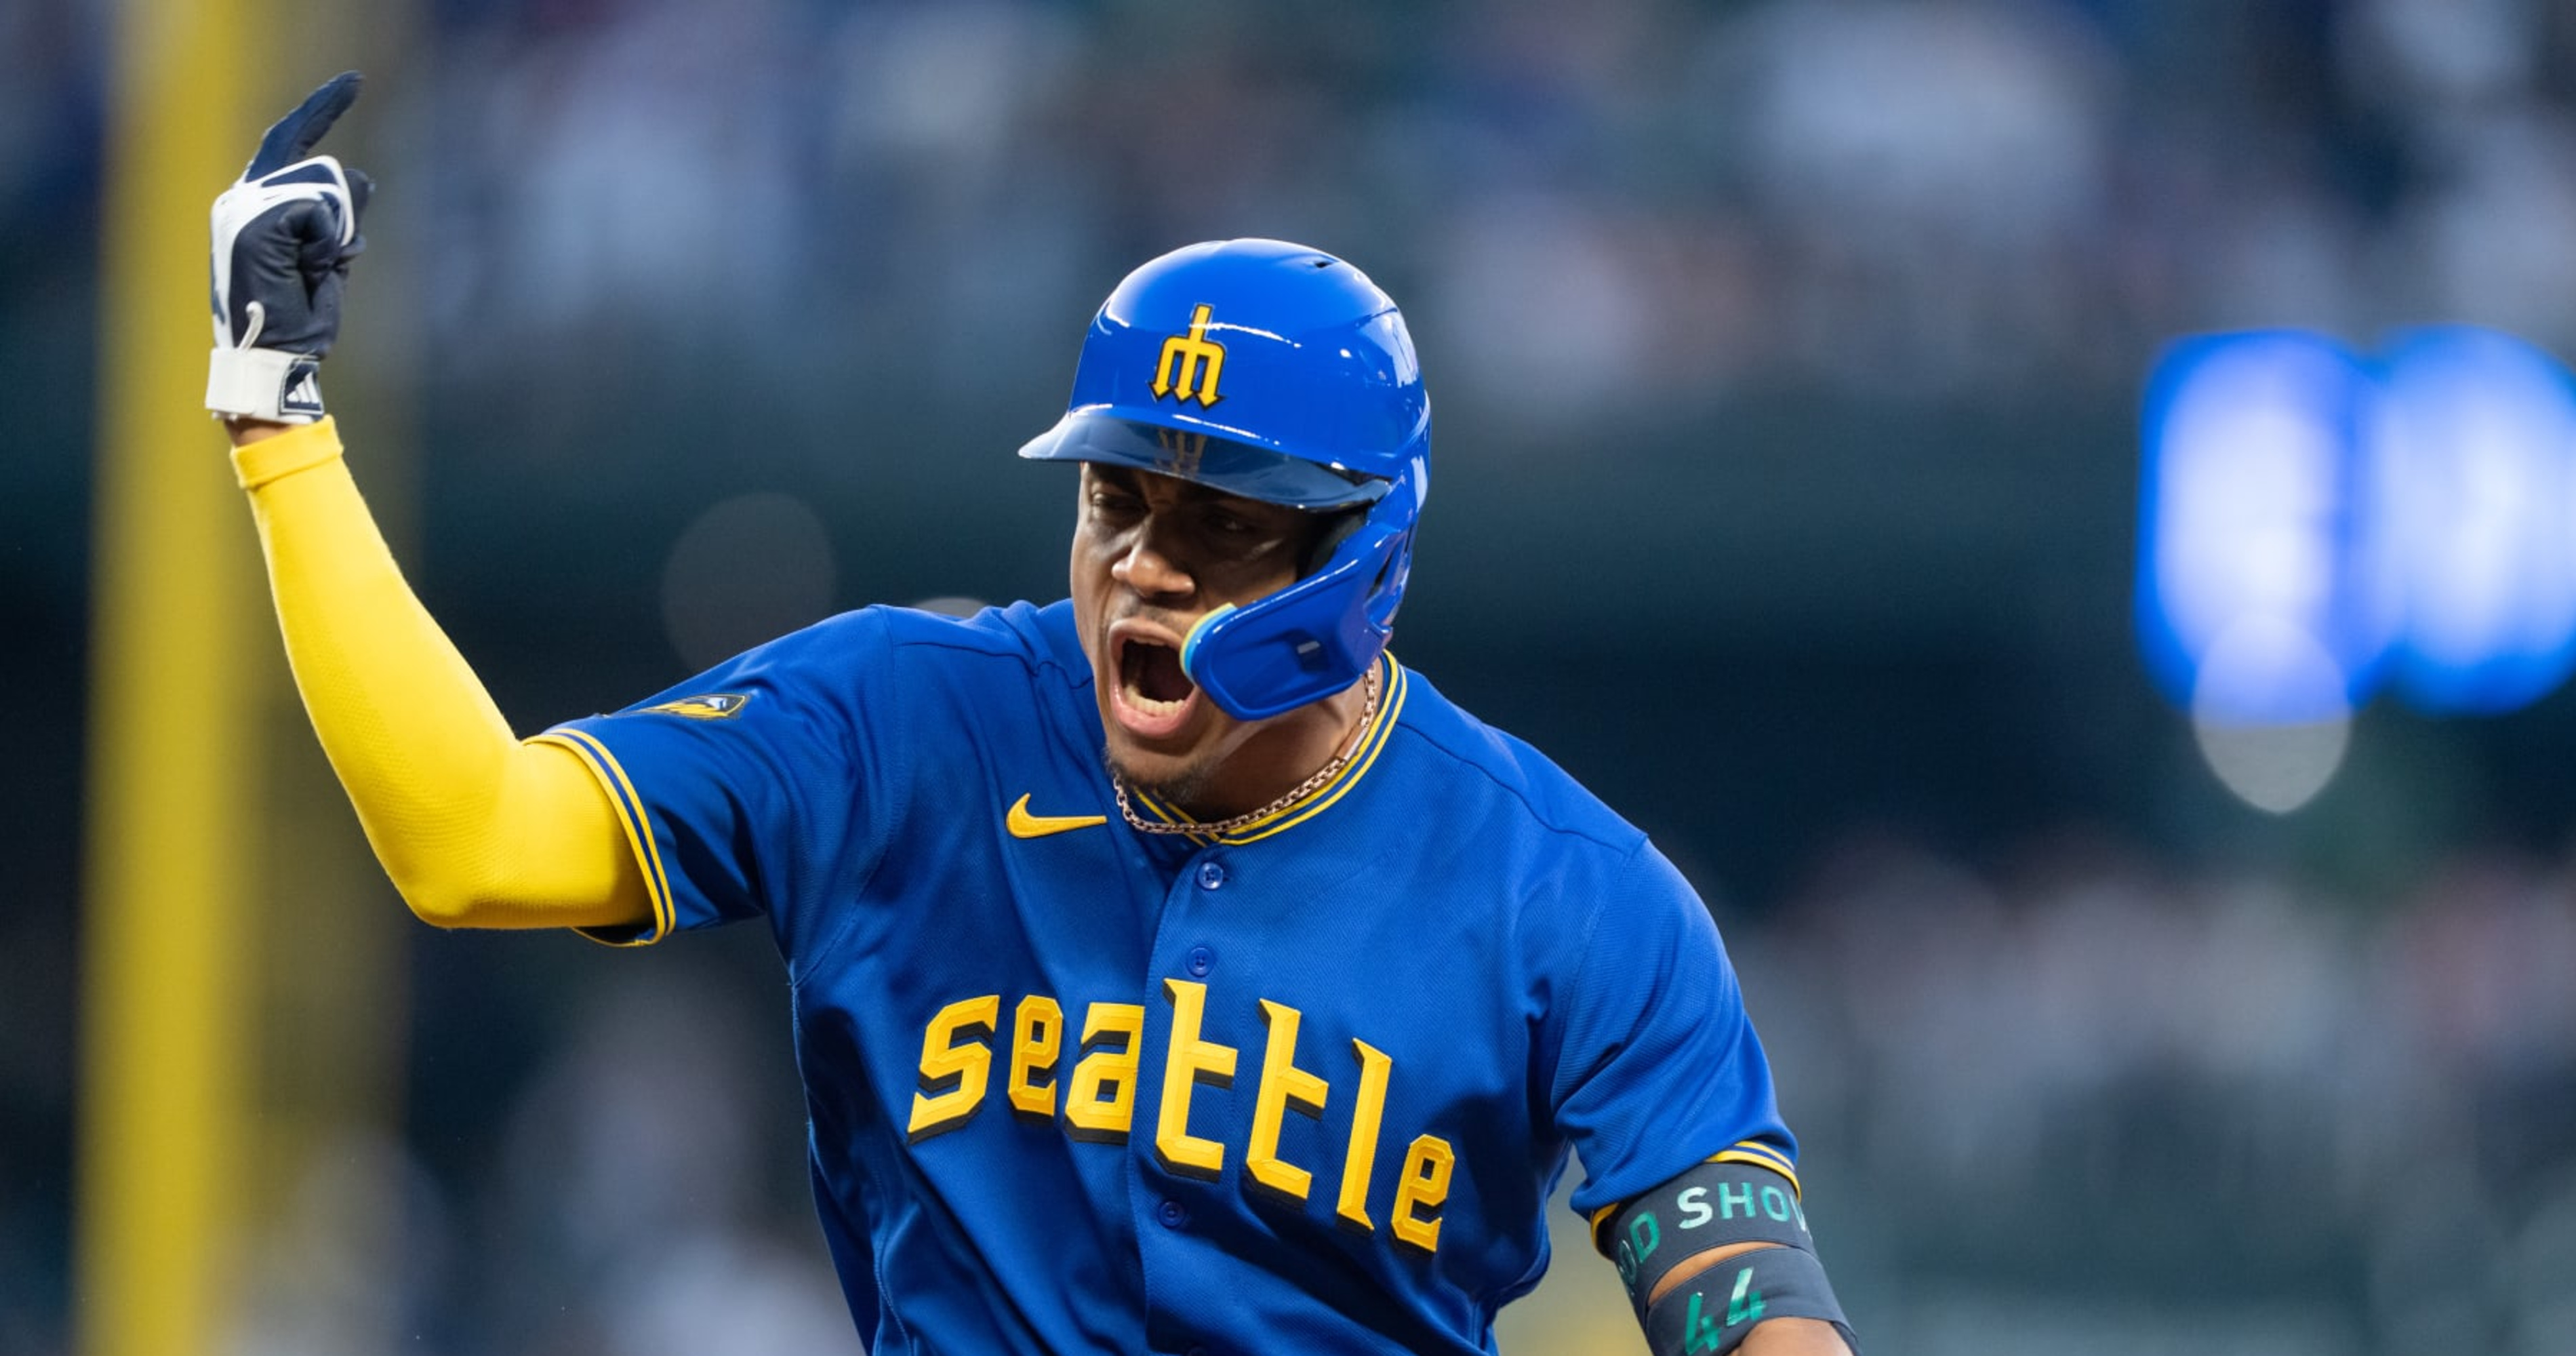 MLB All-Star week: Over 100K fans set to visit Seattle 